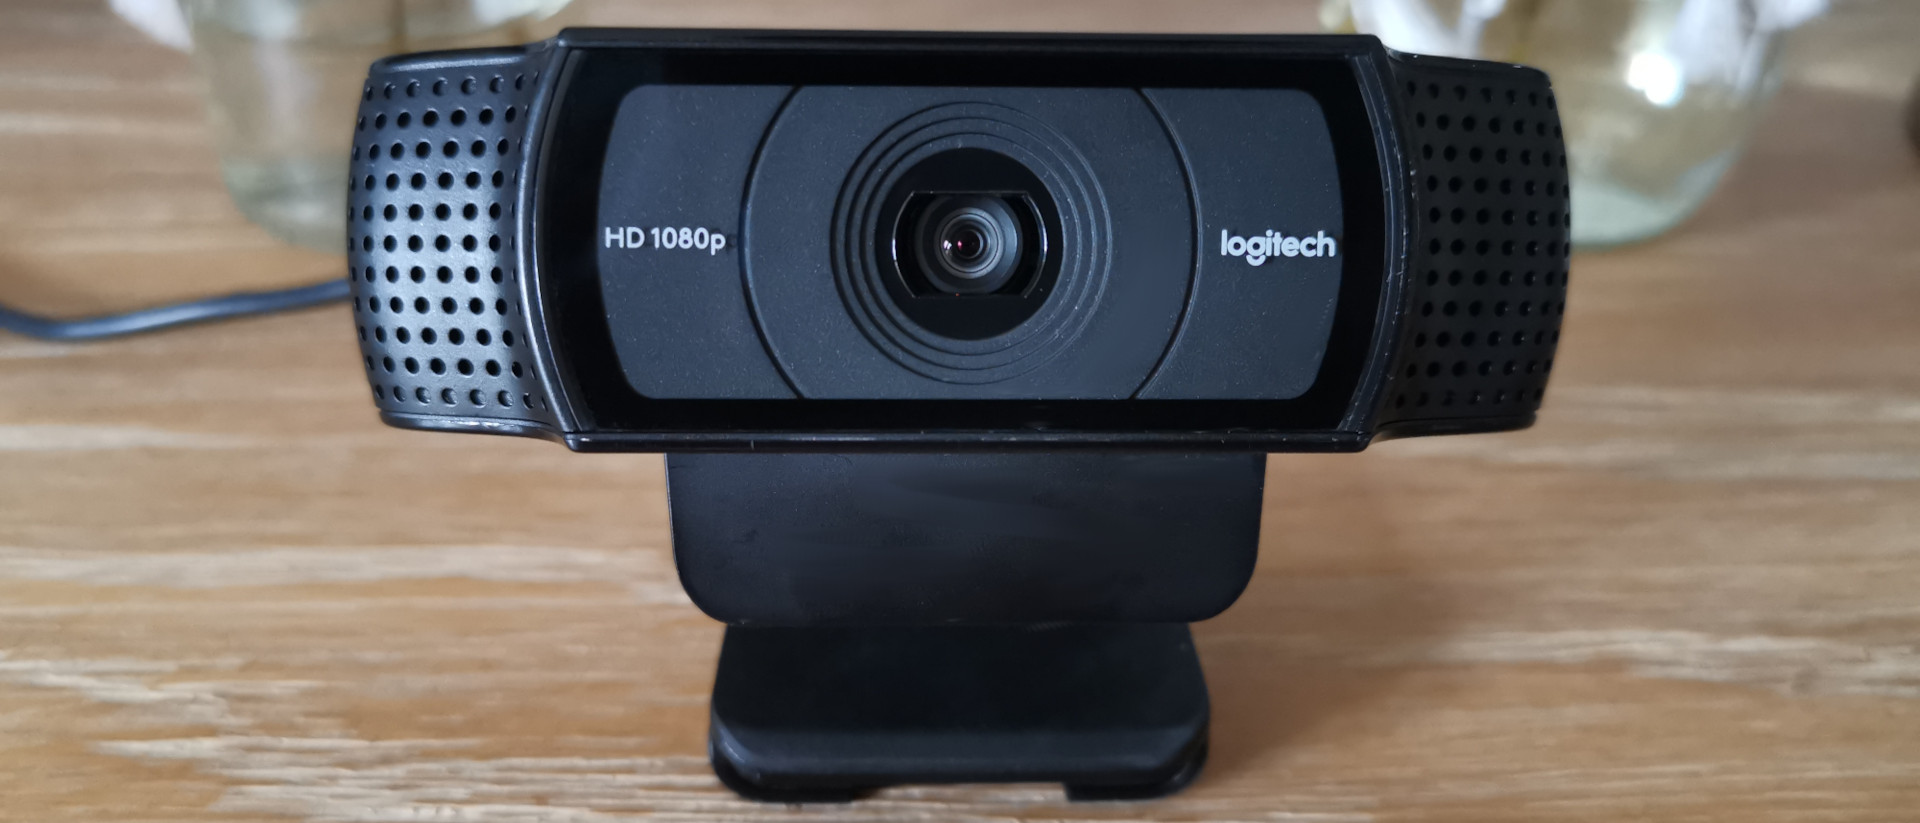 Gargara Yan yan emülsiyon  Logitech C920 Webcam review | TechRadar